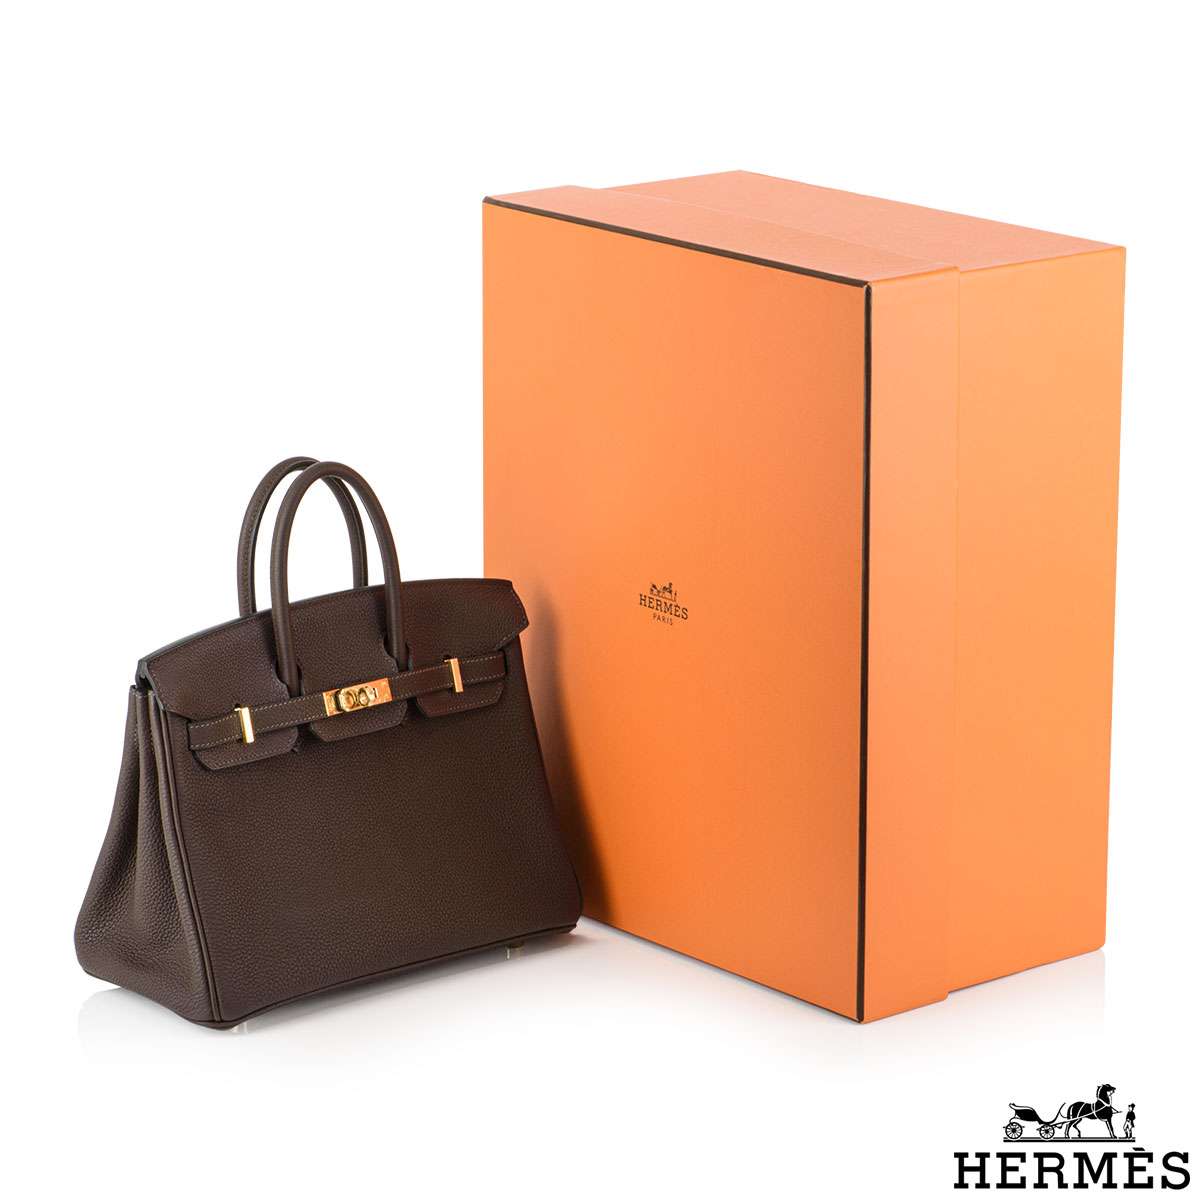 Hermés 25cm Chocolate Veau Togo Birkin Bag | Rich Diamonds